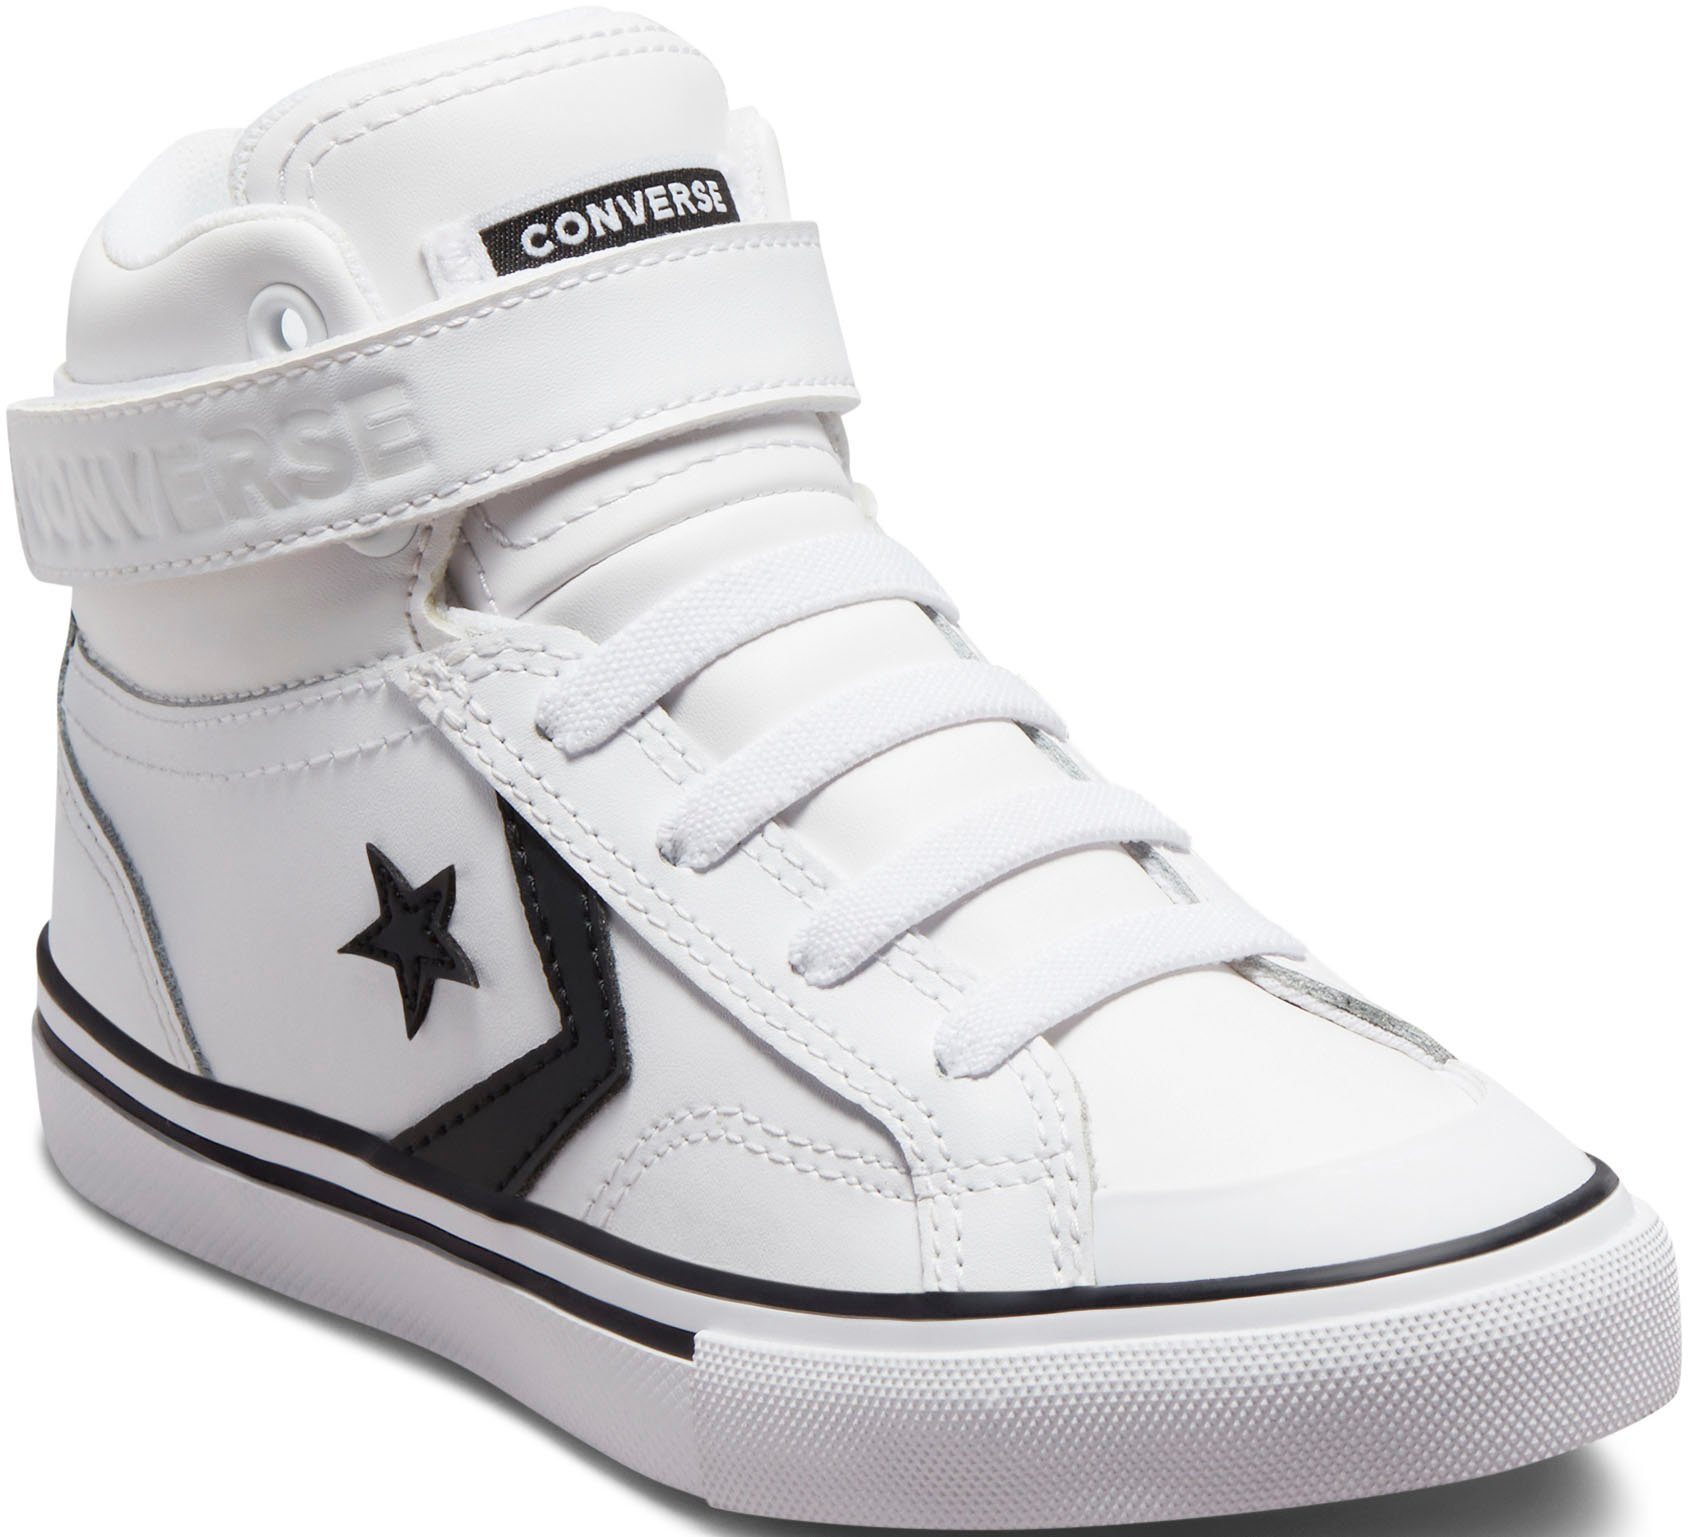 STRAP Sneaker Converse PRO weiß-schwarz BLAZE LEATHER